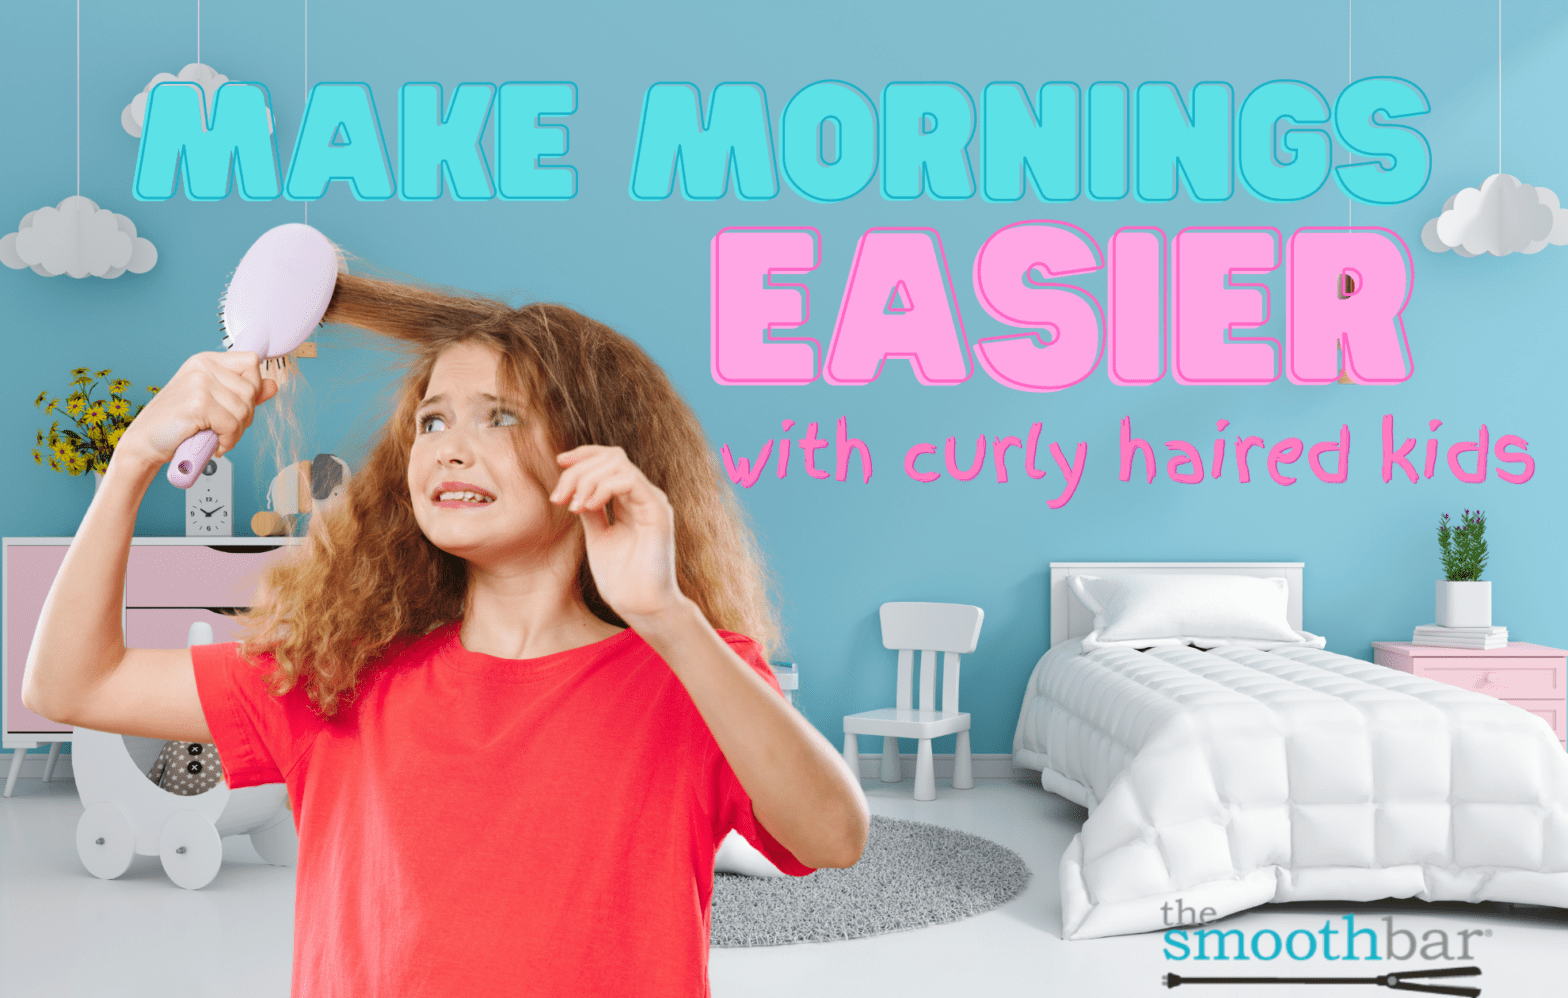 Make mornings